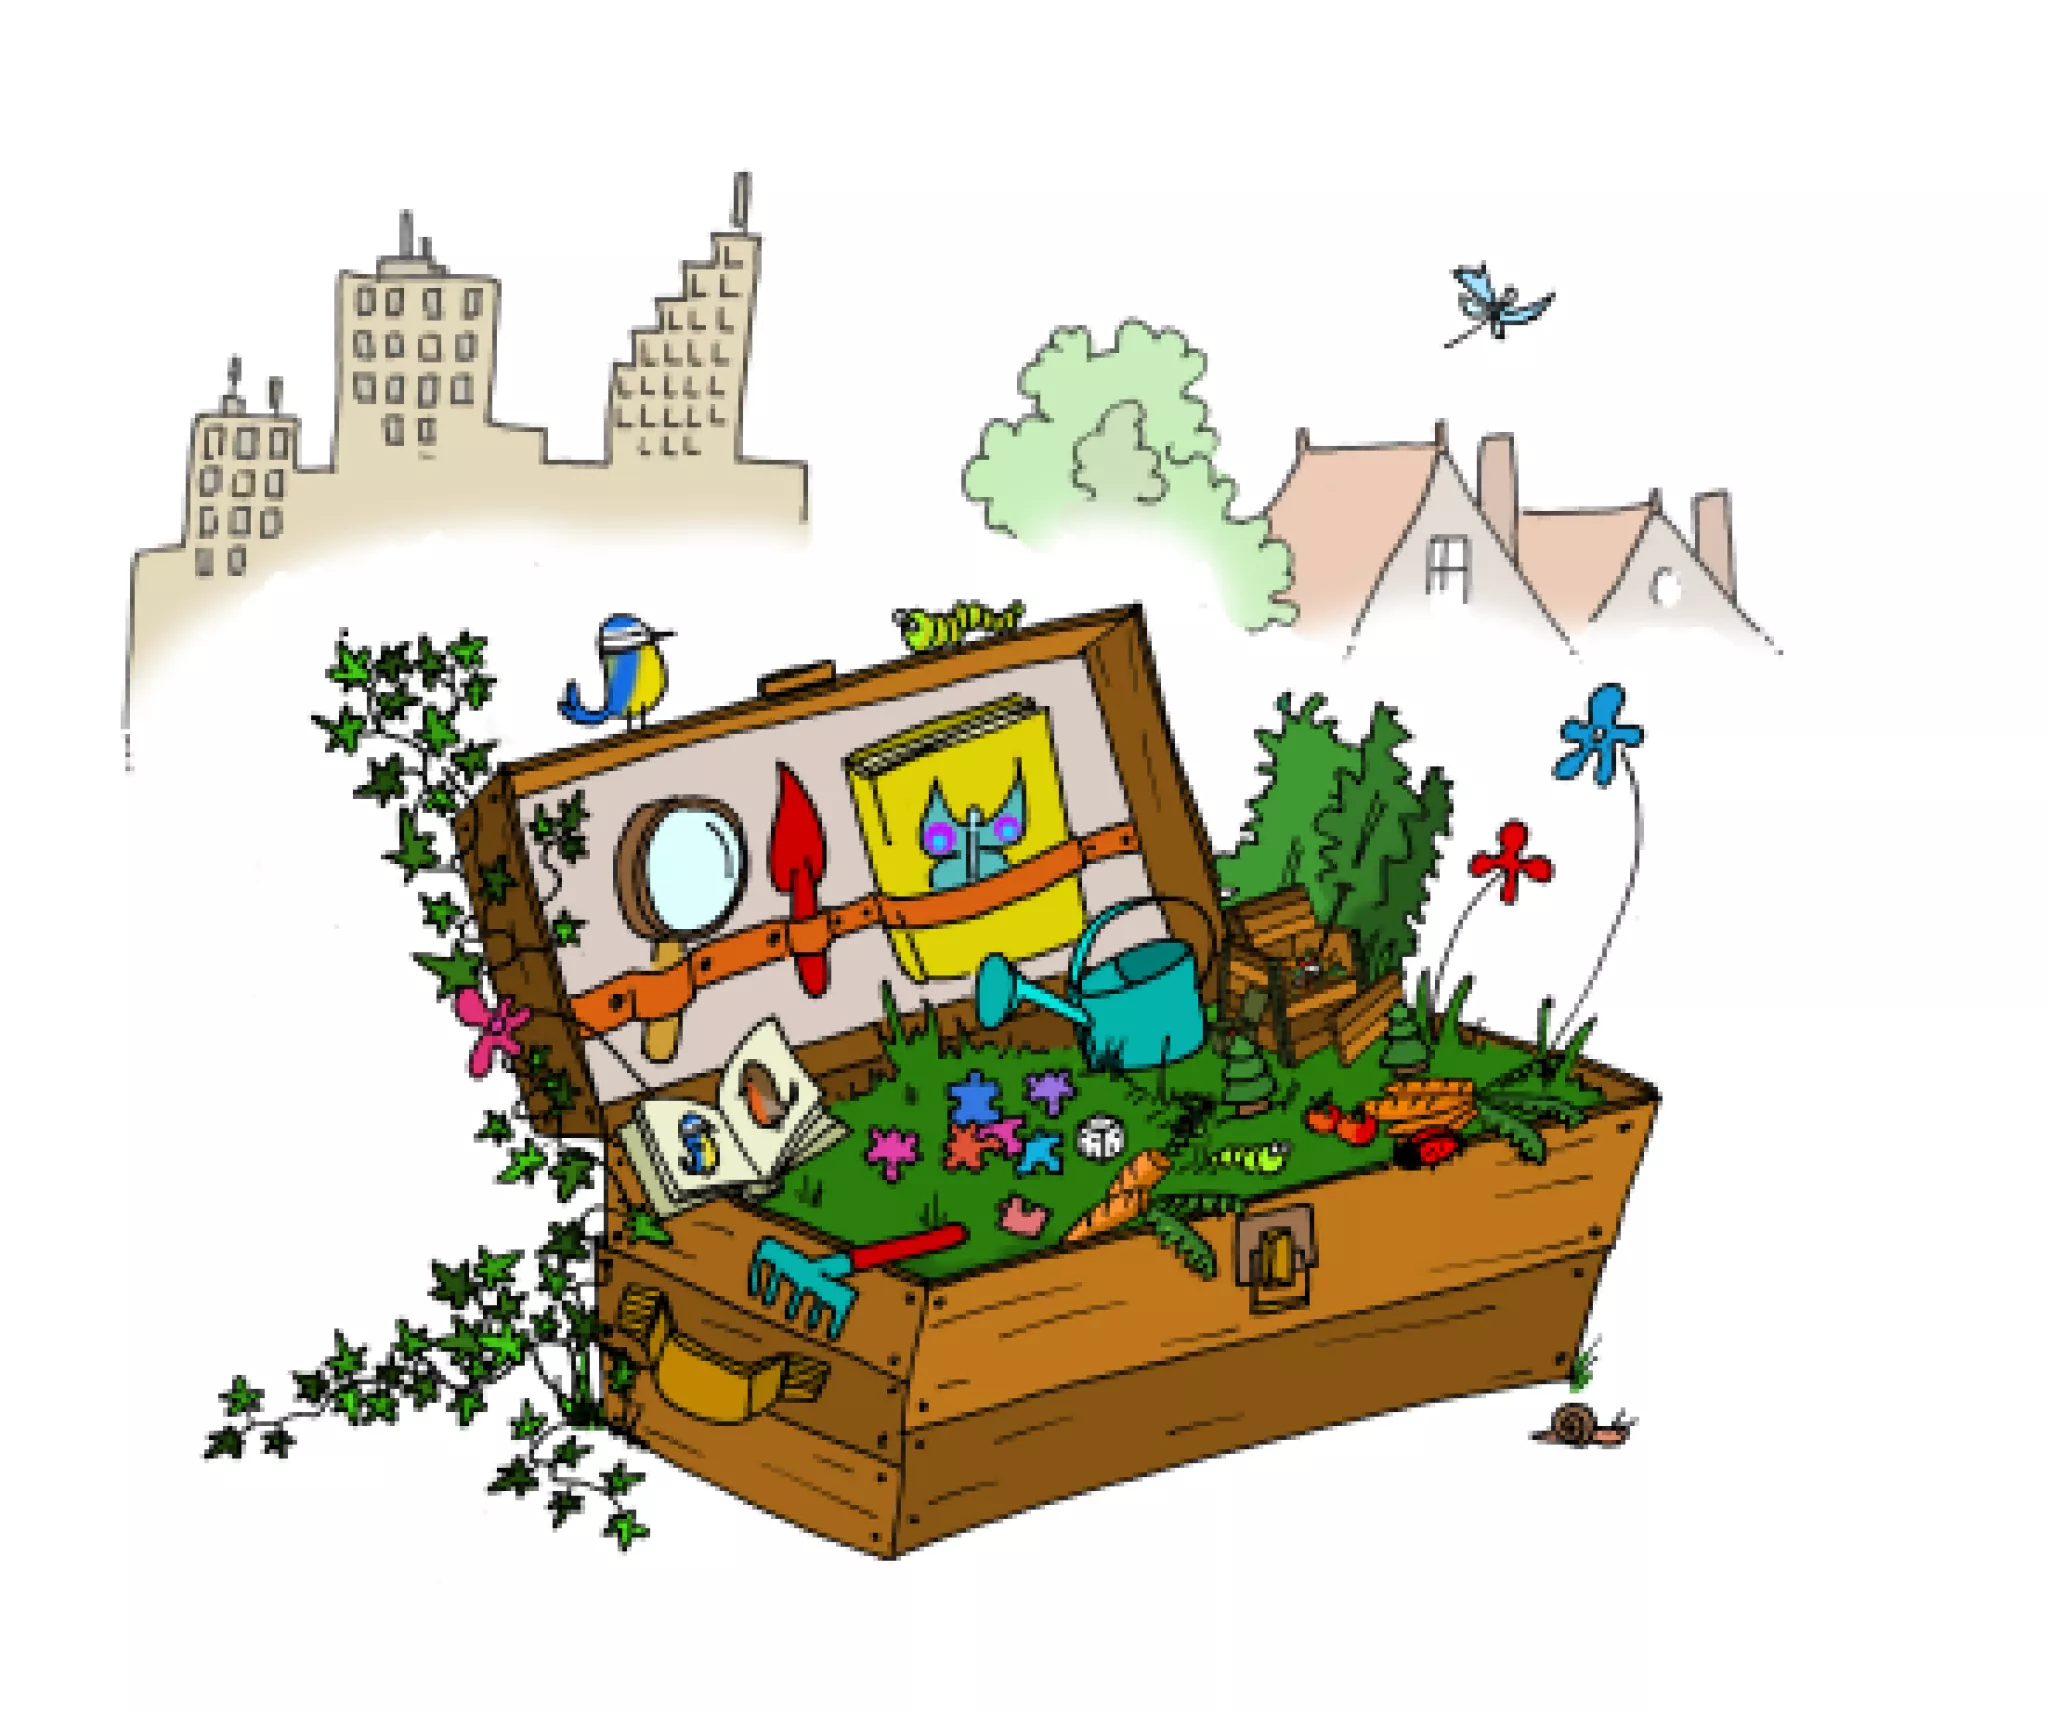 Illustration de la malle "Ensemble, jardinons au naturel"